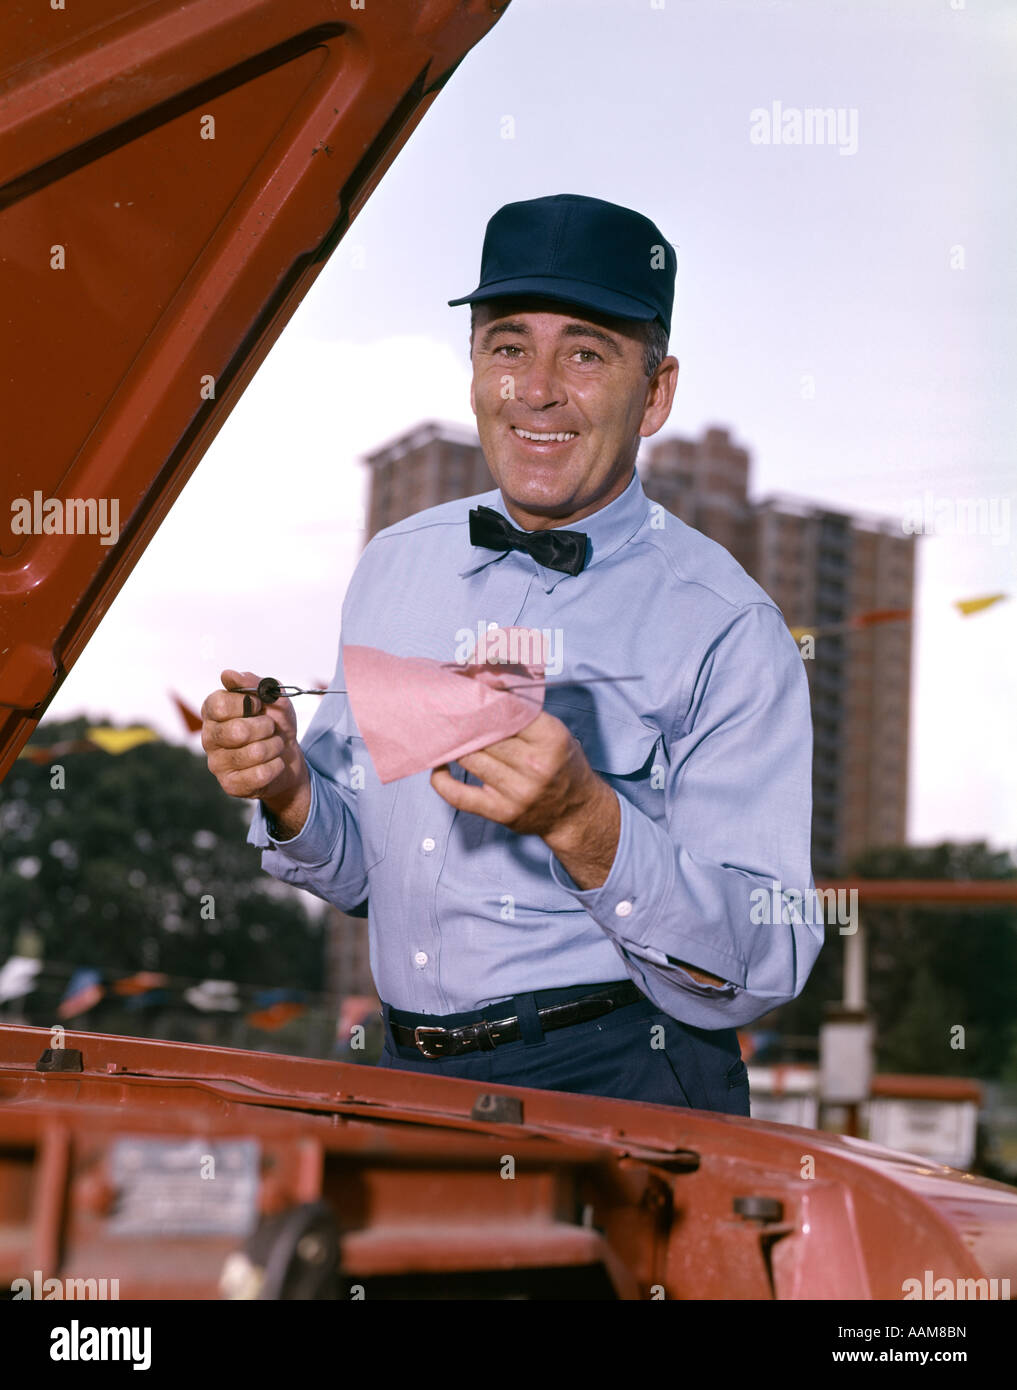 1960s MAN GAS SERVICE STATION MECHANIC CHECKING OIL DIP STICK UNDER CAR HOOD SMILING RETRO BLUE UNIFORM HAT BOW TIE Stock Photo